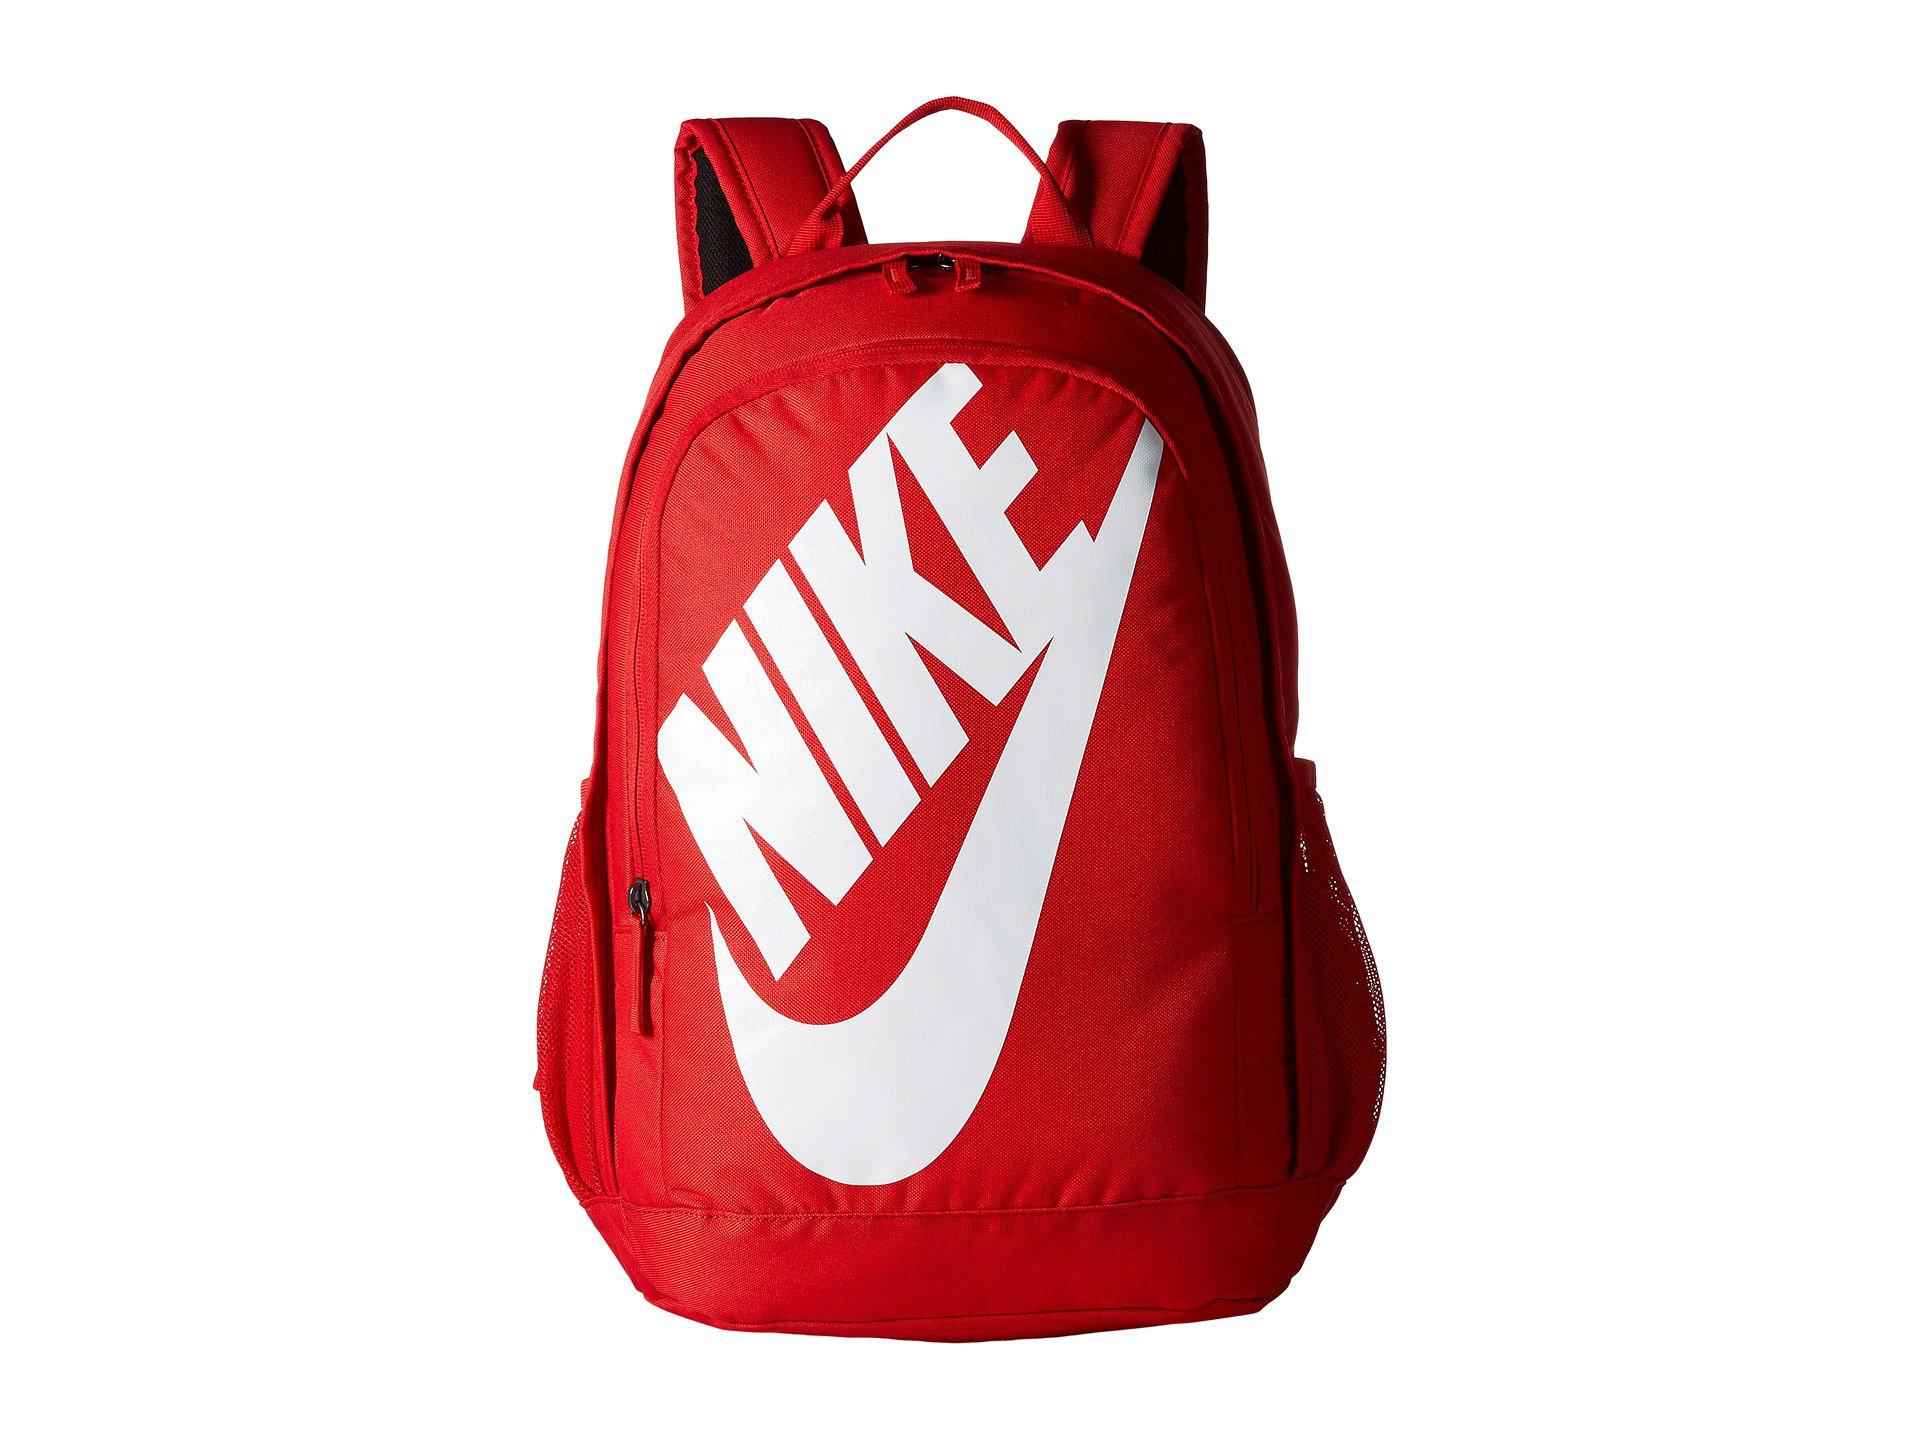 Vintage 80's Nike Elite duffel/gym bag Colors are a... - Depop